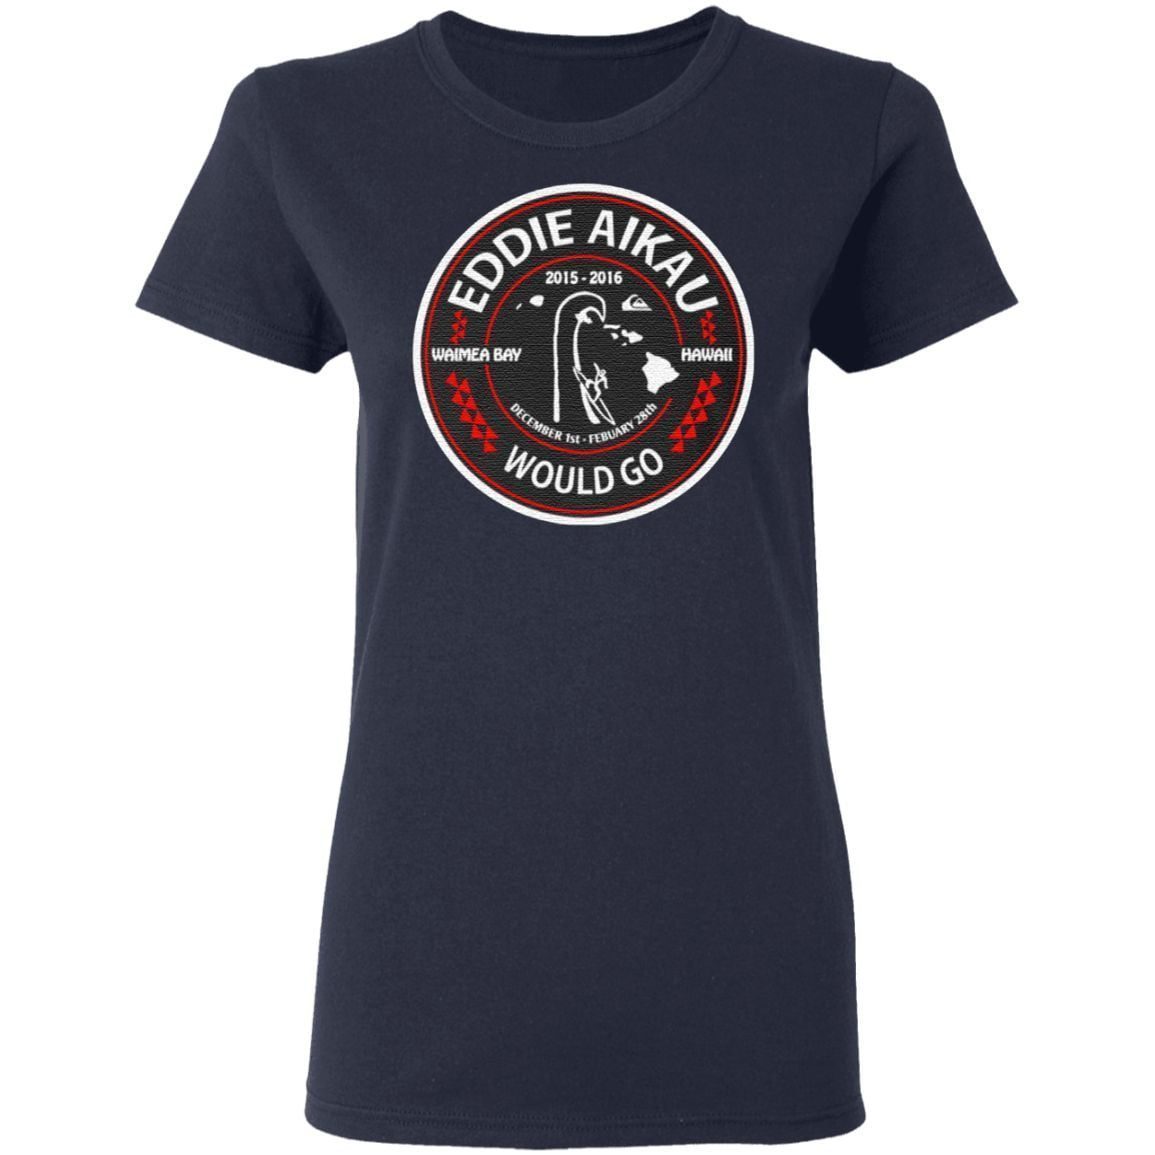 Eddie Aikau Would Go T-Shirt